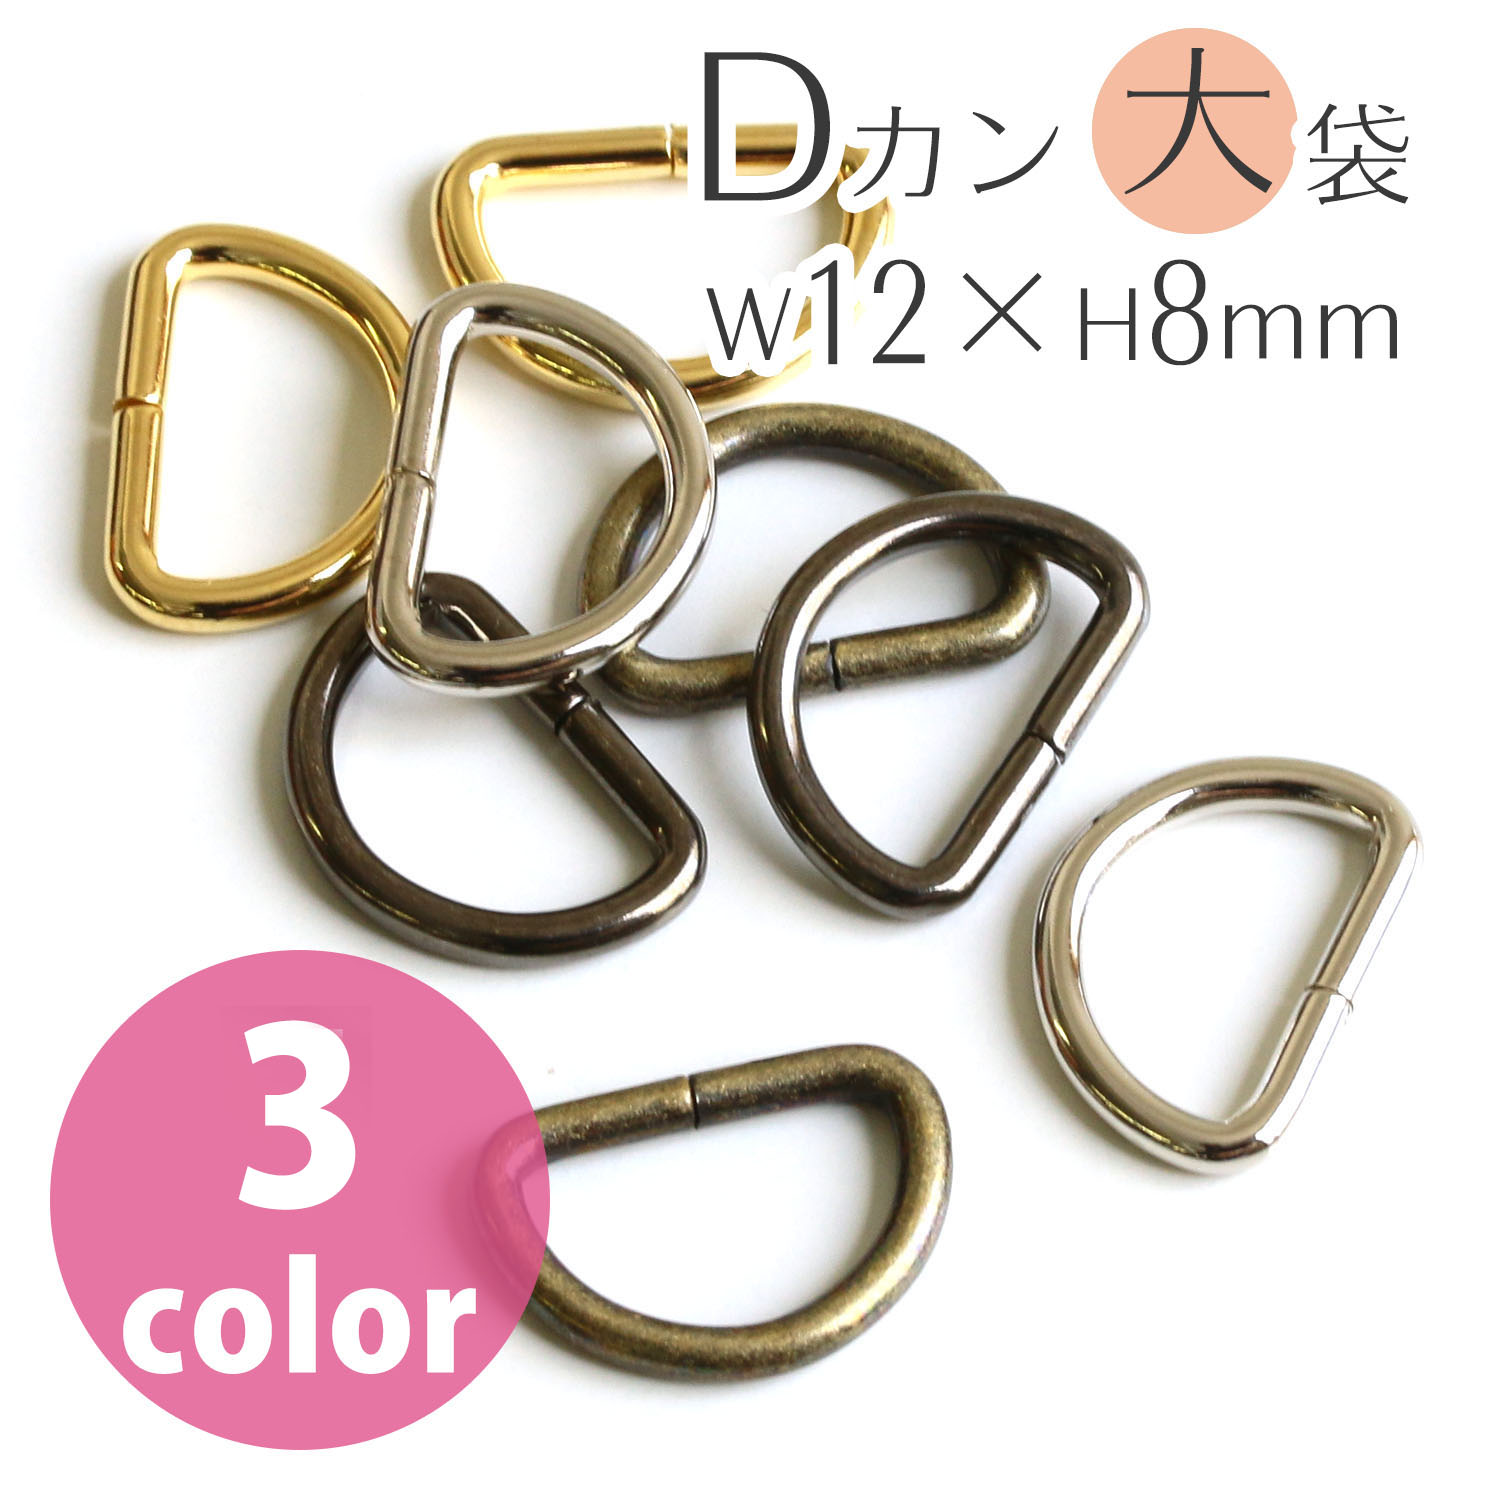 S22 D-Ring  12 x 8mm", diameter 2mm 120pcs  (bag)